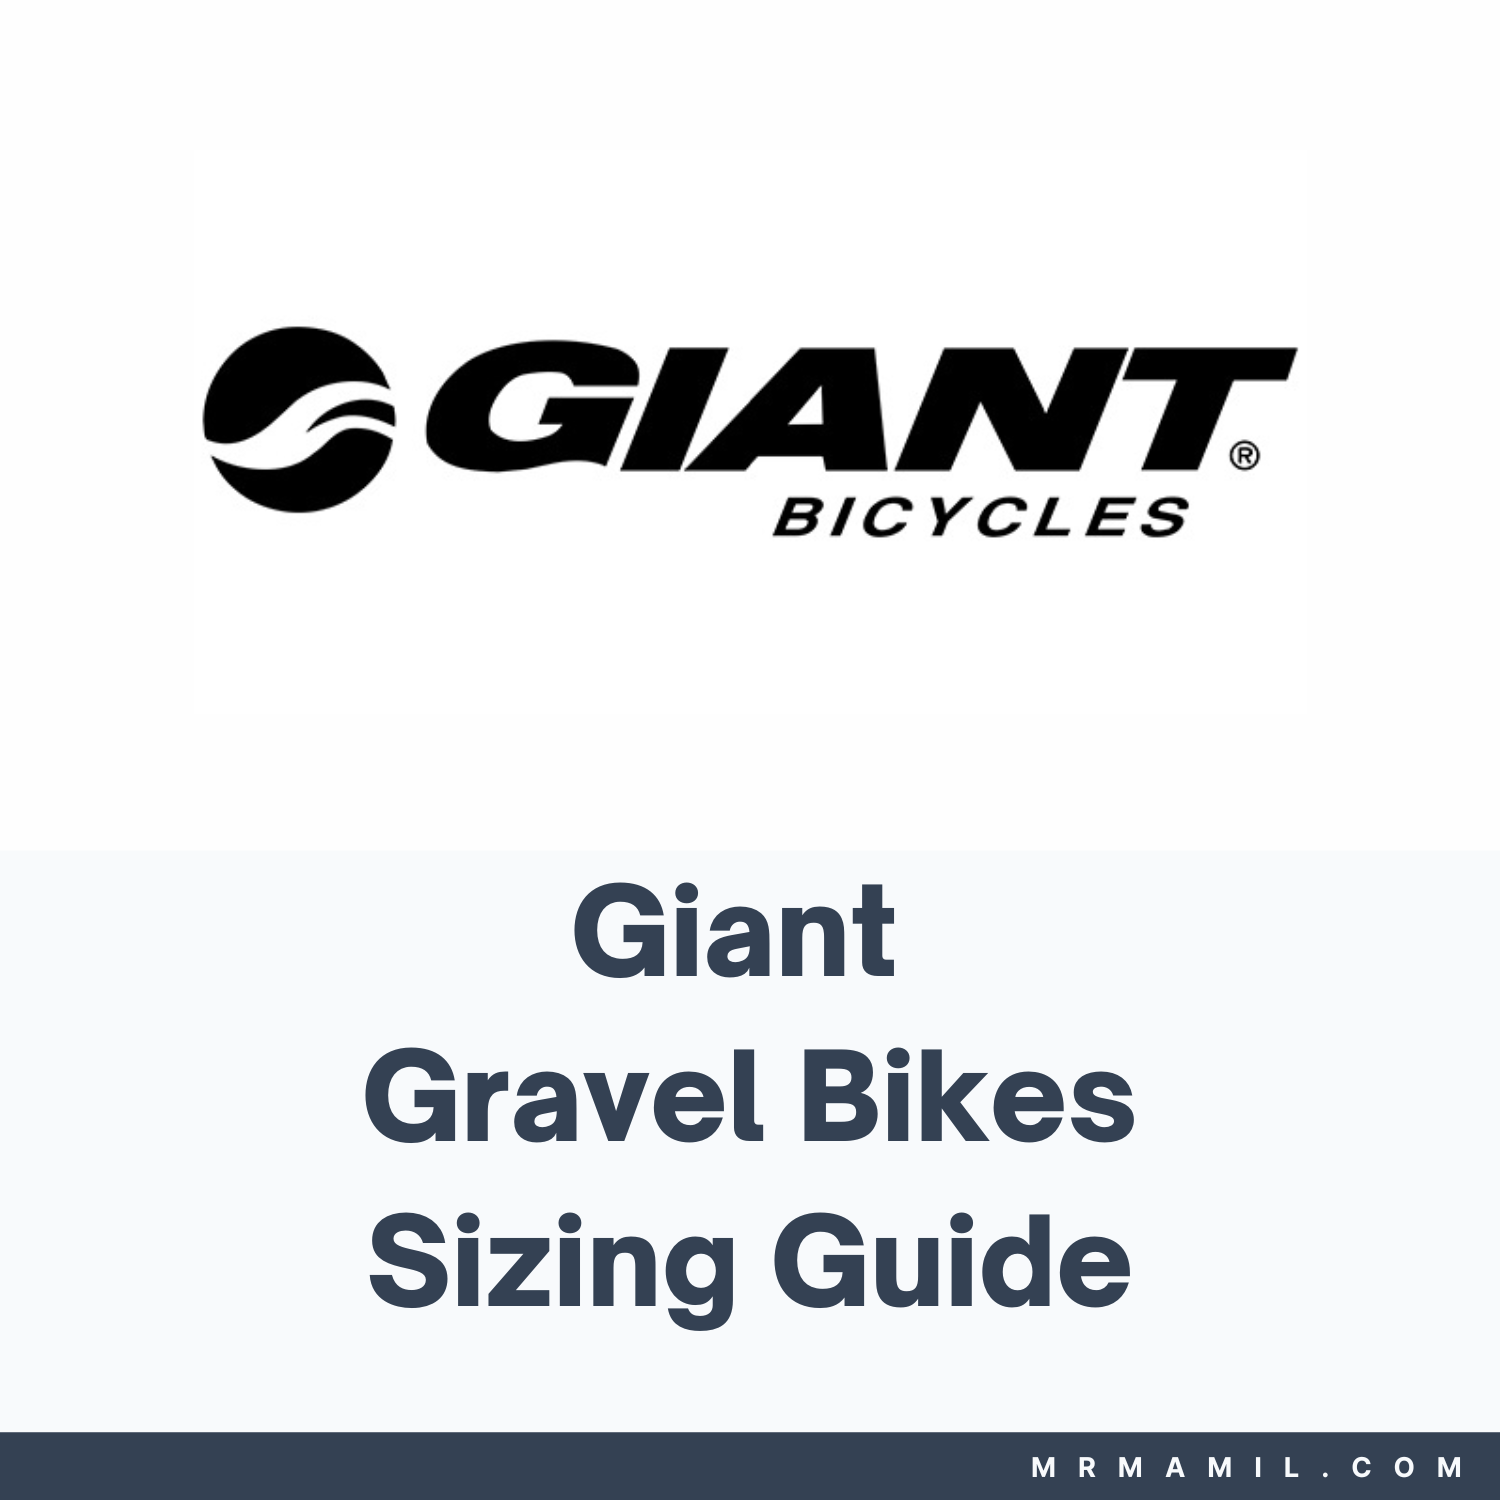 Giant Gravel Bikes Sizing Guide